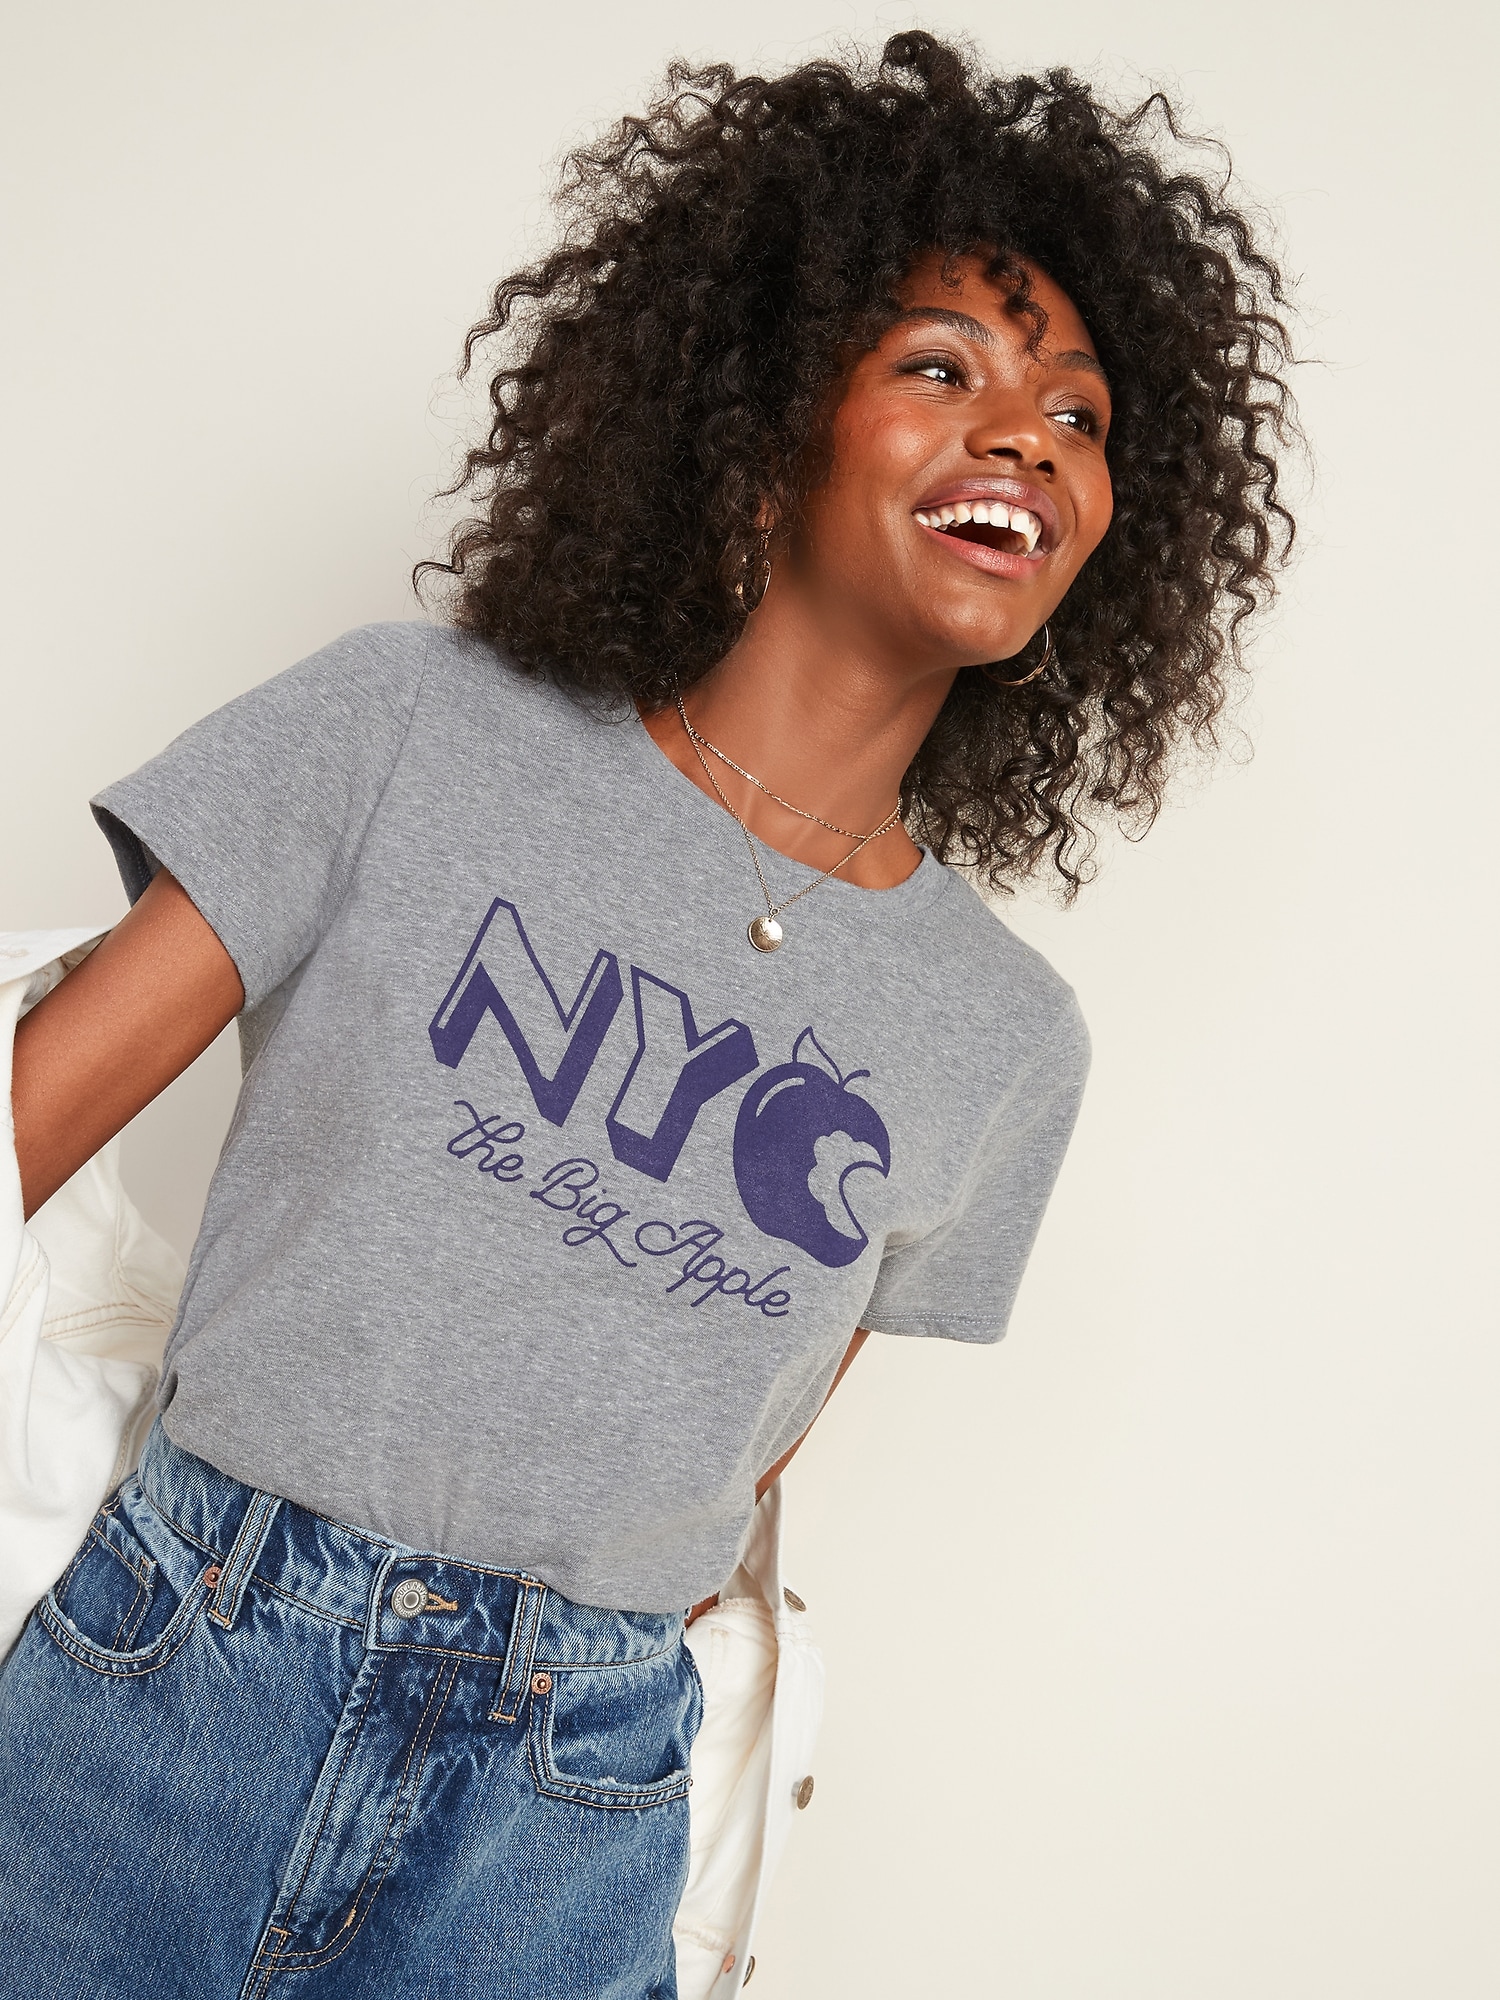 Old Navy - New York Knicks - T-Shirt - Womens Large - Blue B32